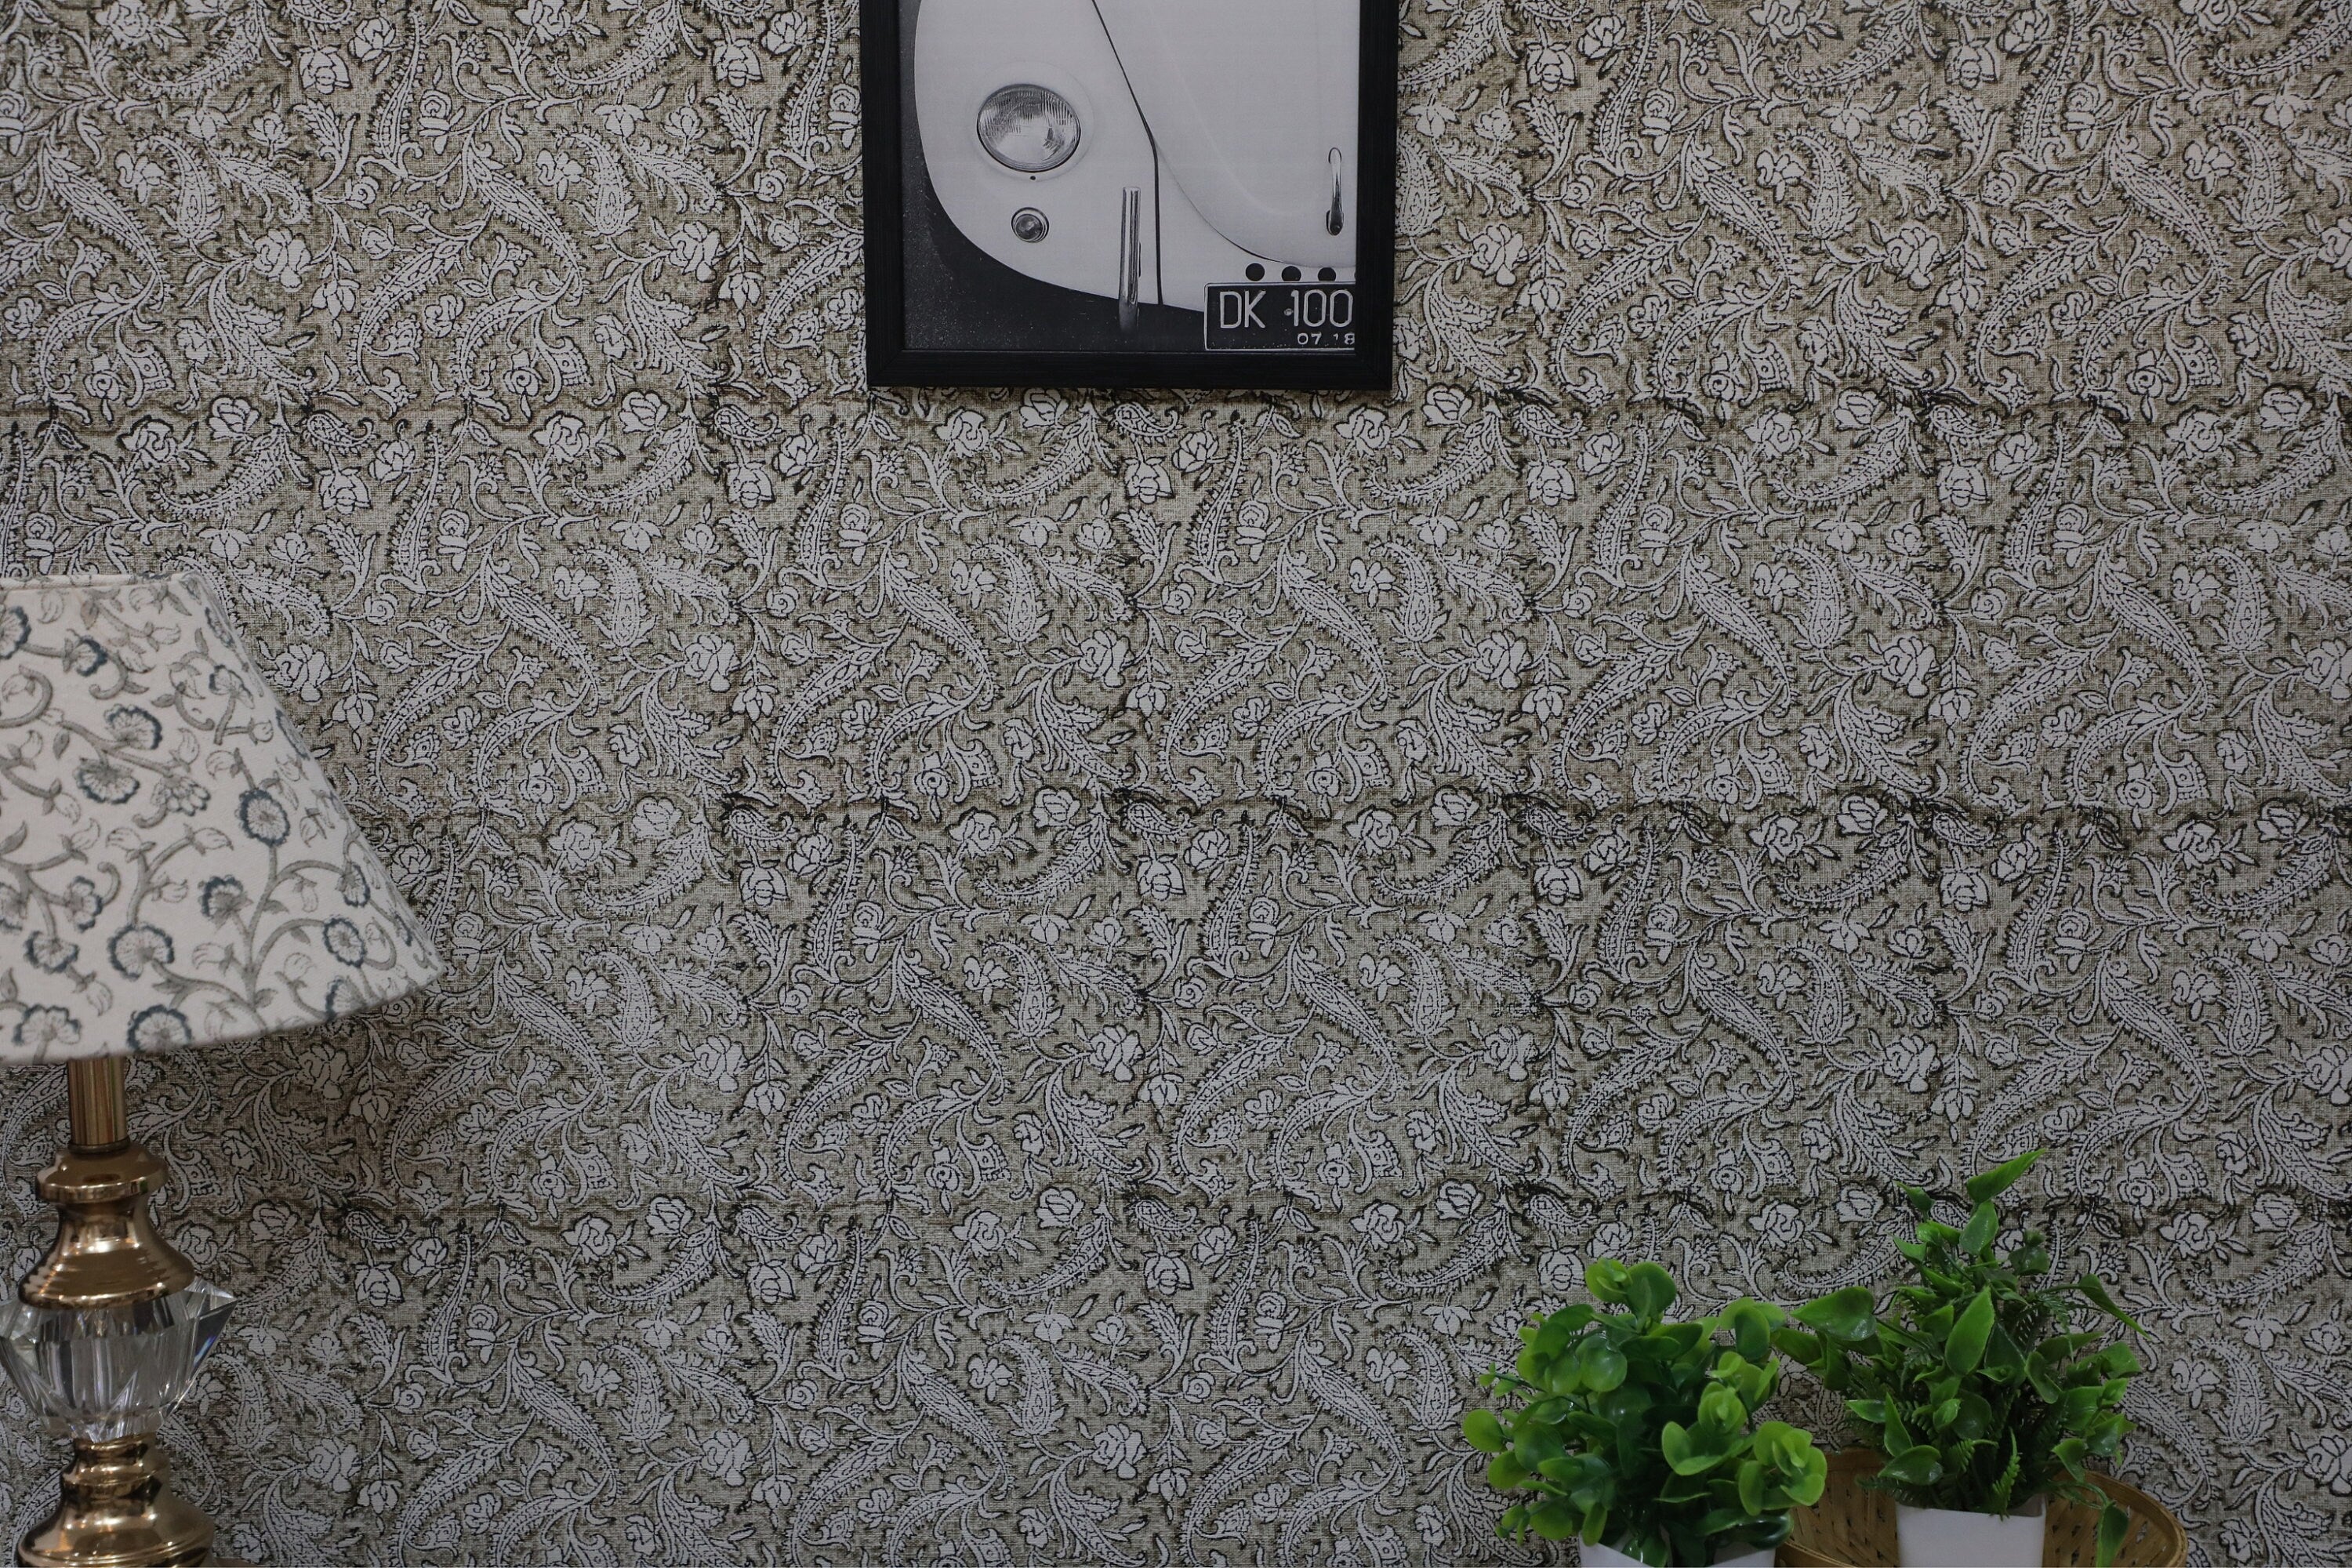 Block Print Wallpaper, Living room wallpaper, Handmade Indian print wallpaper  - Black Forest - Wall Decoration Art